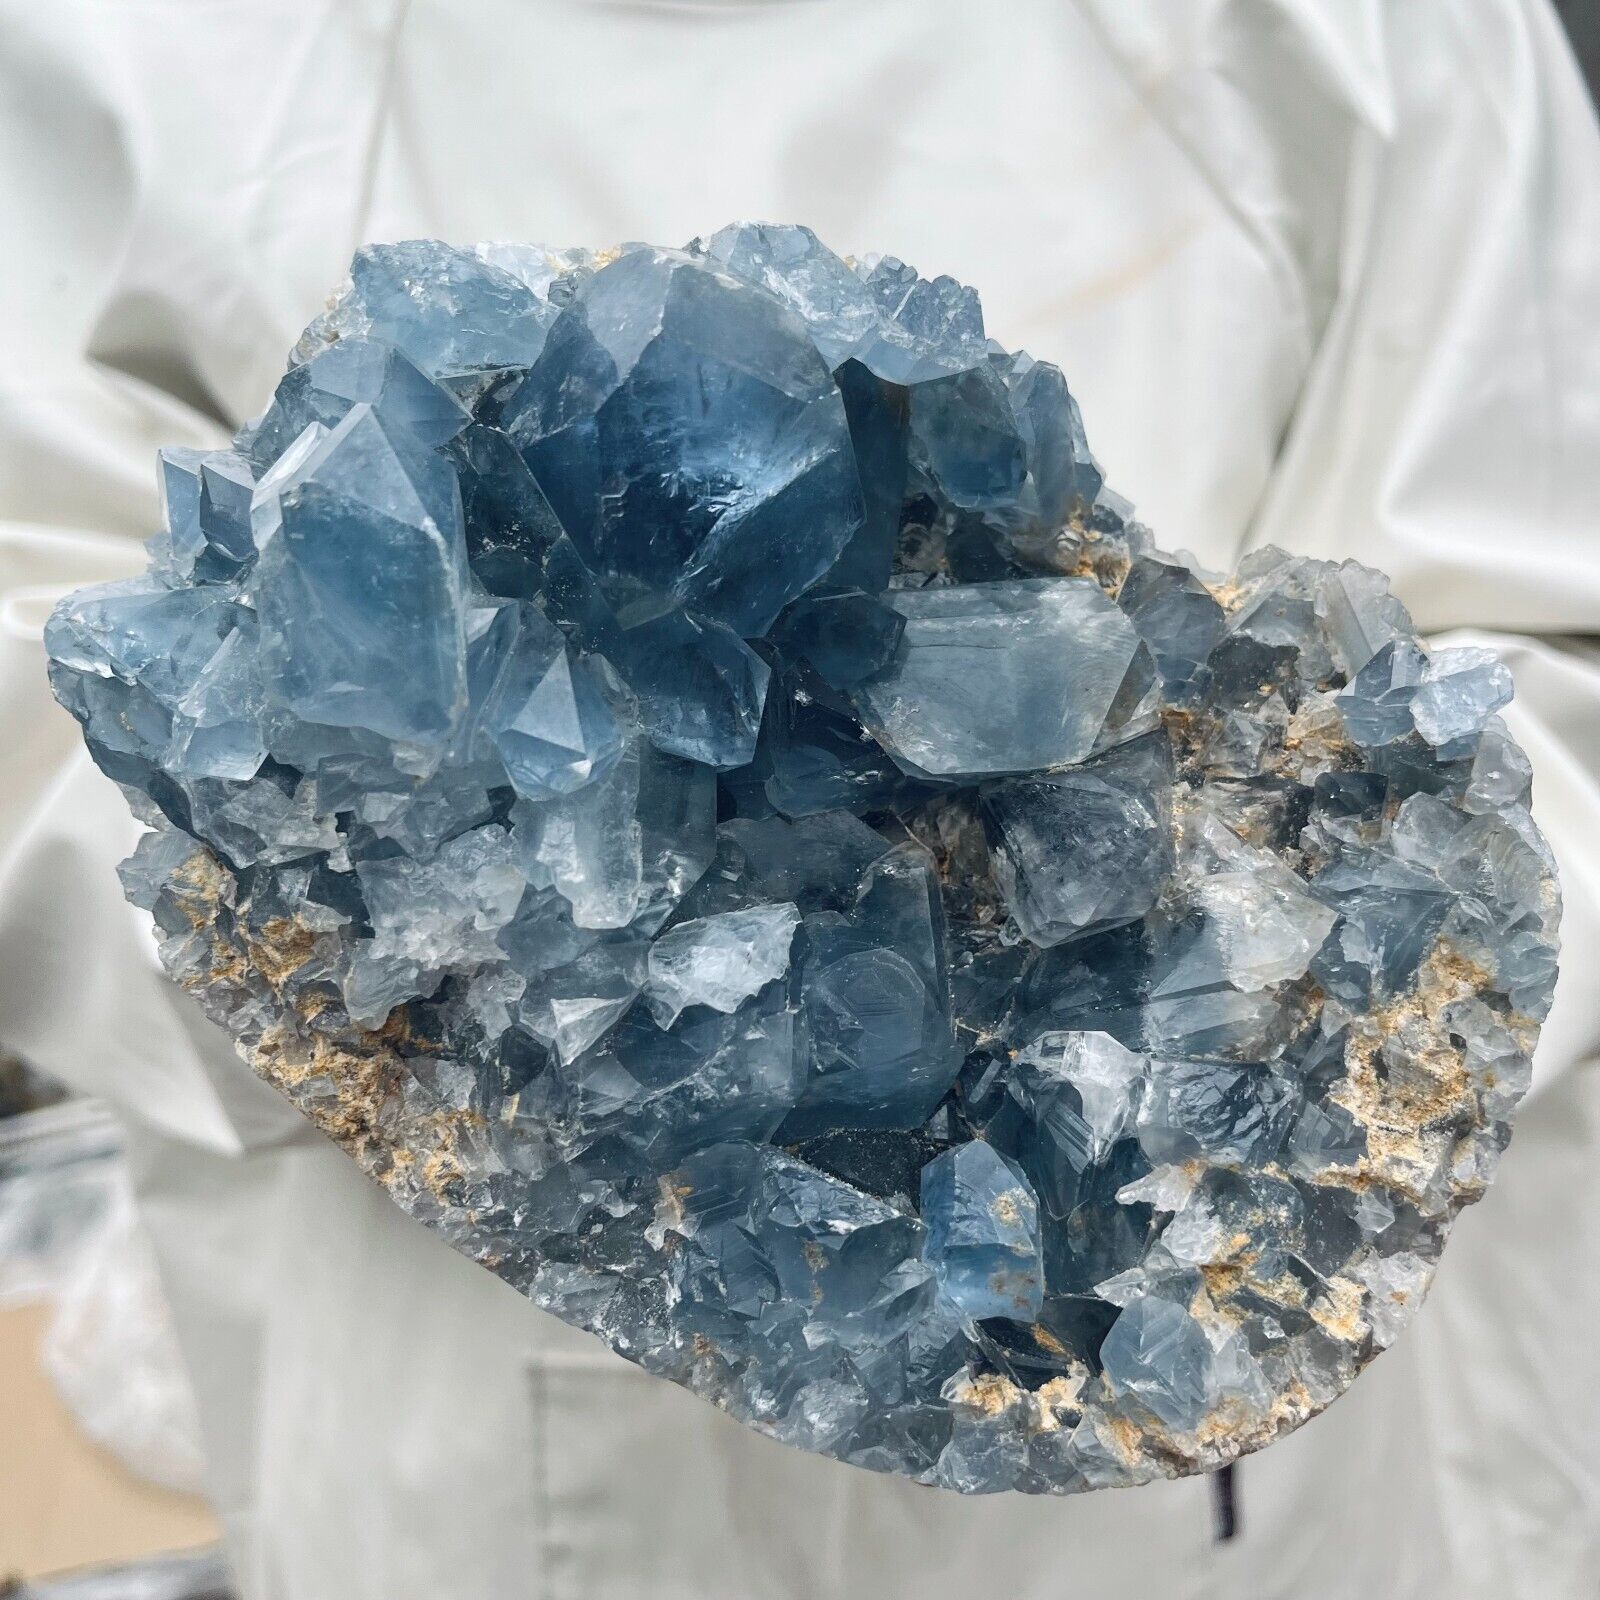 5.5lb Natural Blue Celestite Cluster Geode From Sankoany, Madagascar